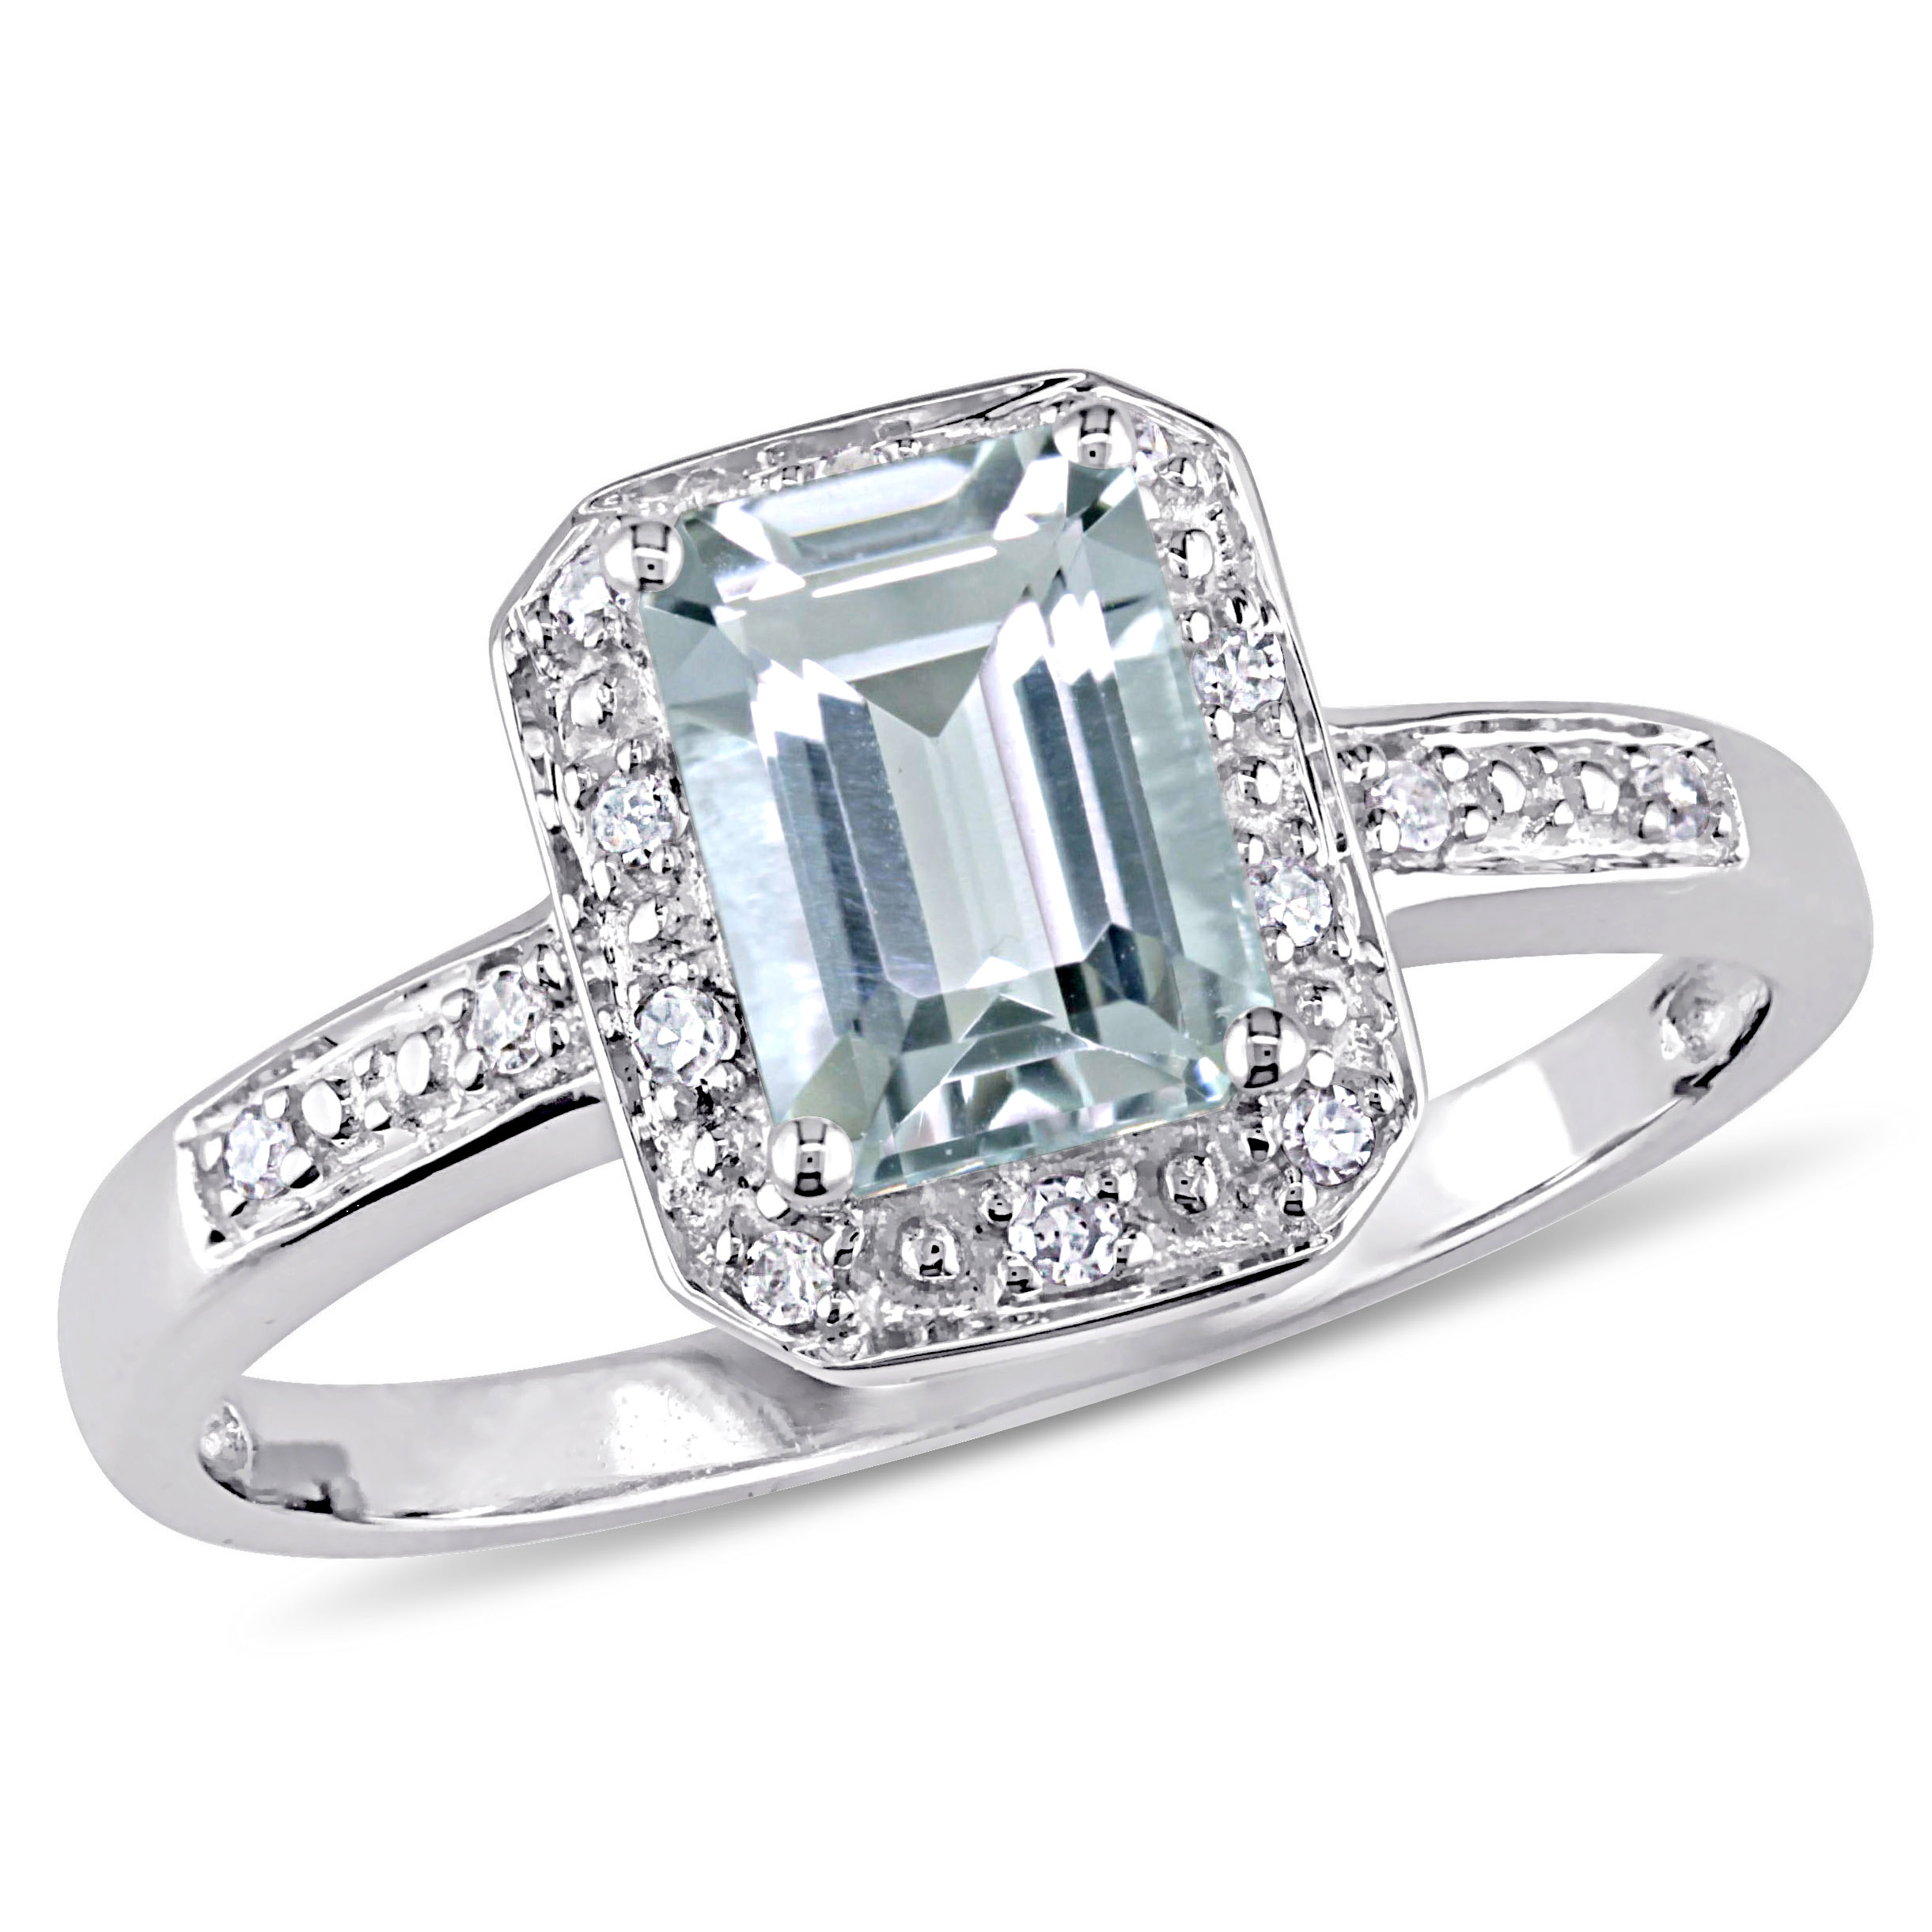 Emerald Cut Aquamarine Ring with Diamonds in 10k White Gold